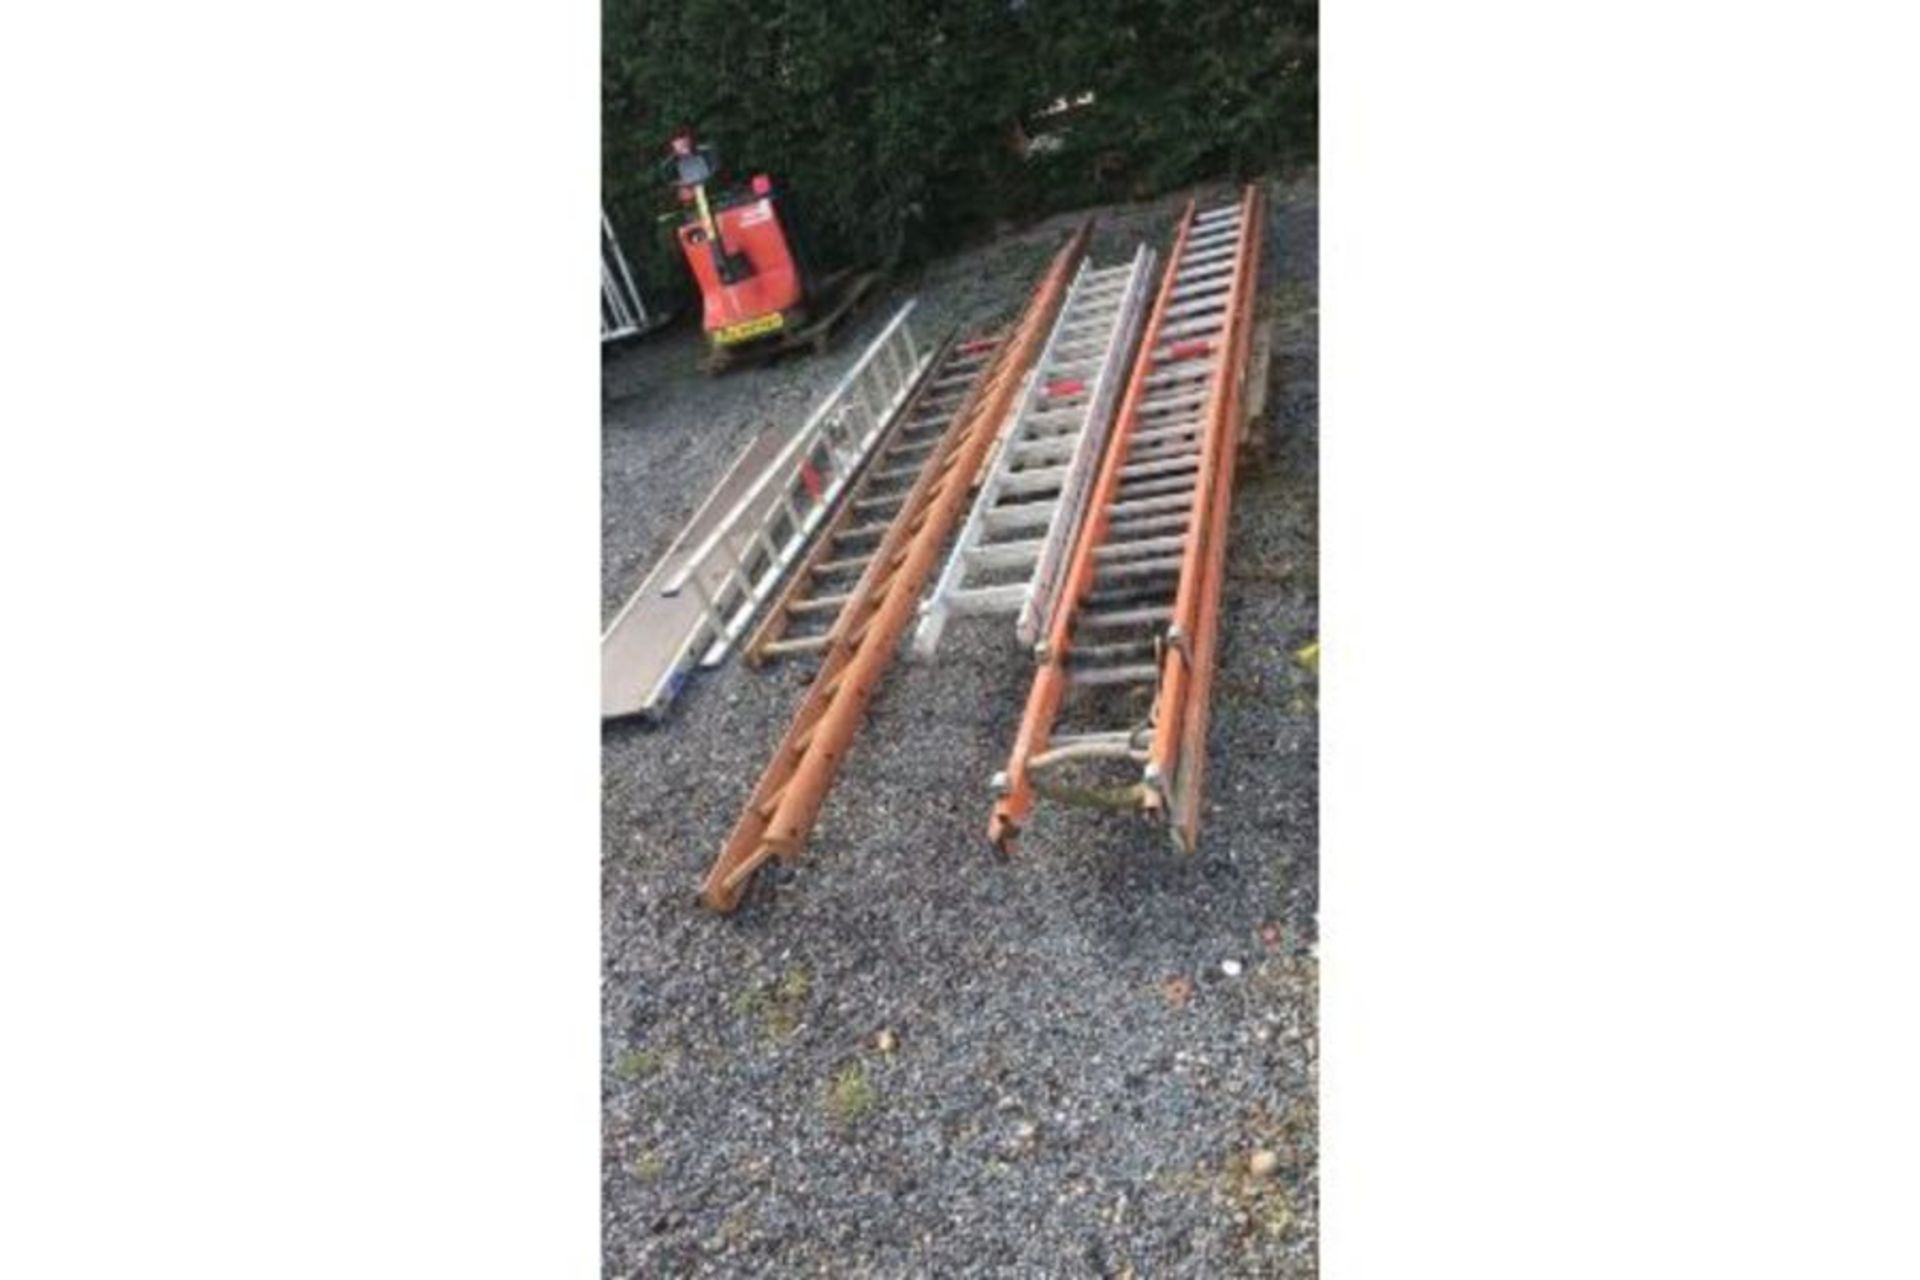 Ladders job lot, fibreglass pole ladder, wooden la